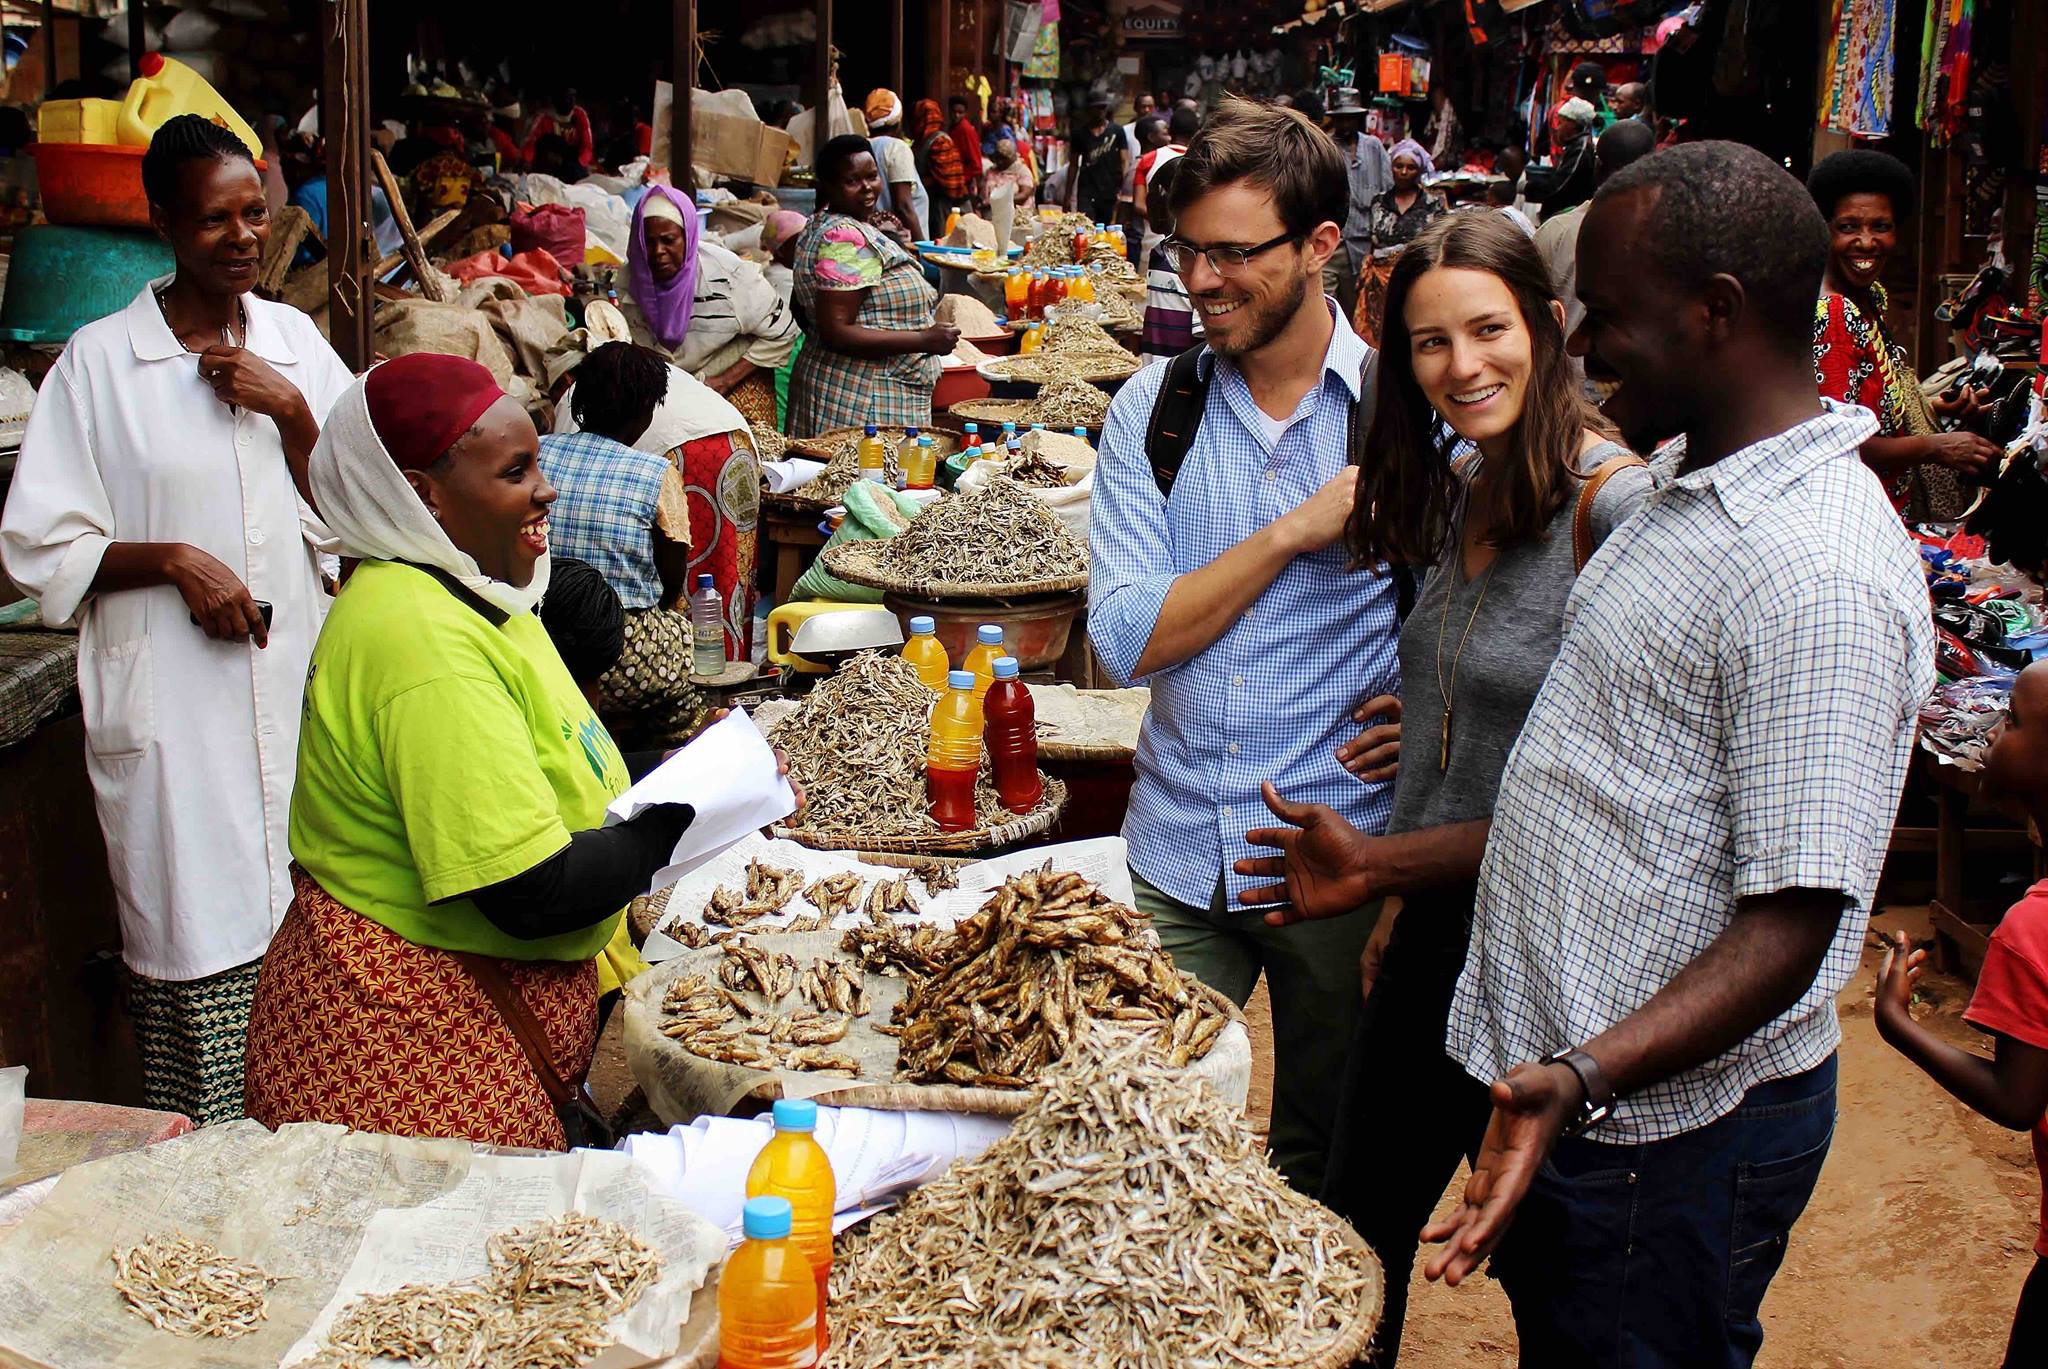 Gorillas, Night Markets & Engagement: East Africa with Rachel Cappucci, Market